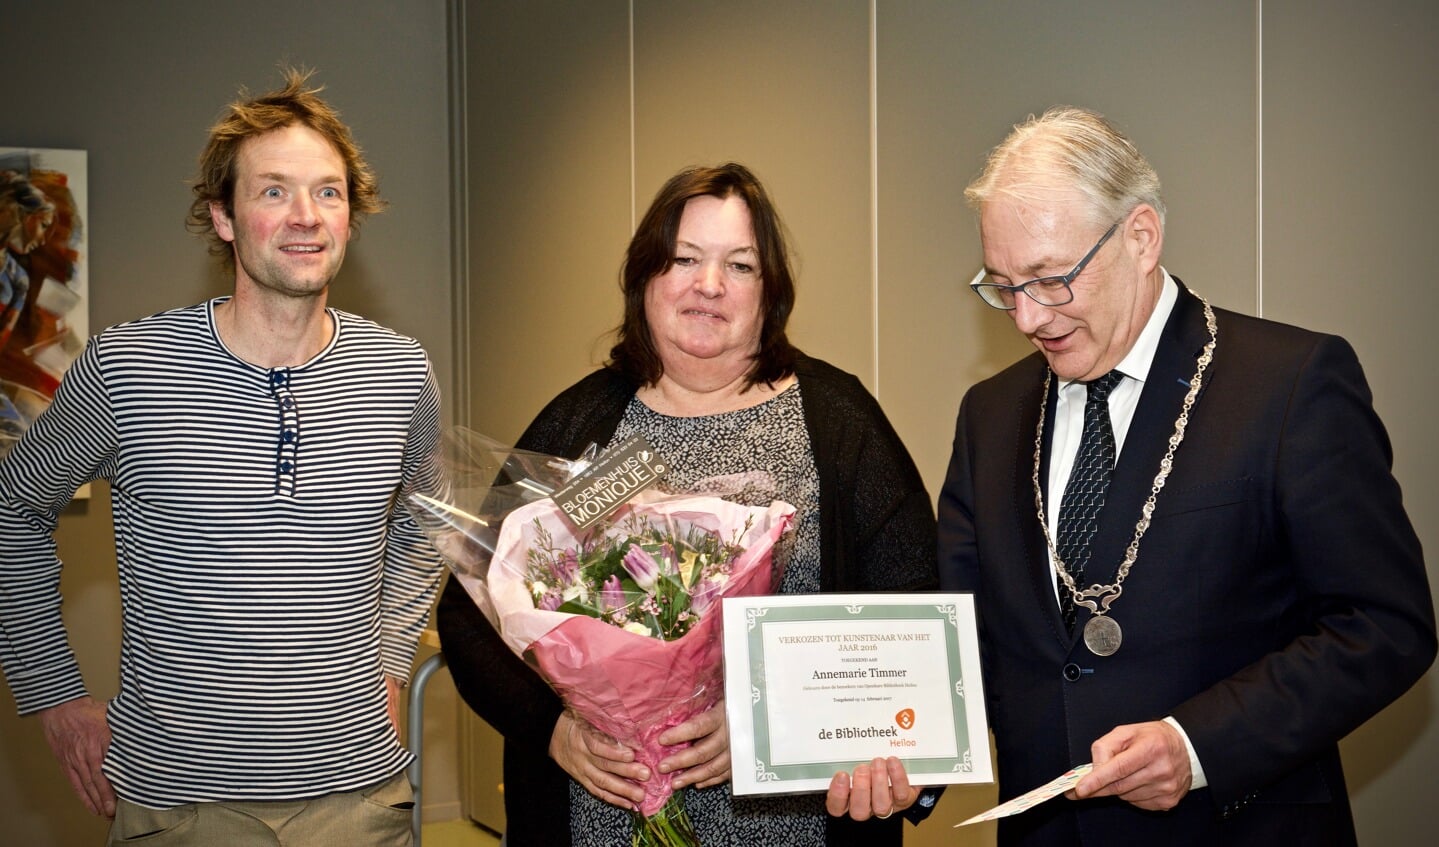 Van links naar rechts: Theo Leering, Annemarie Timmer en Hans Romeyn.
Foto: Stip Fotografie